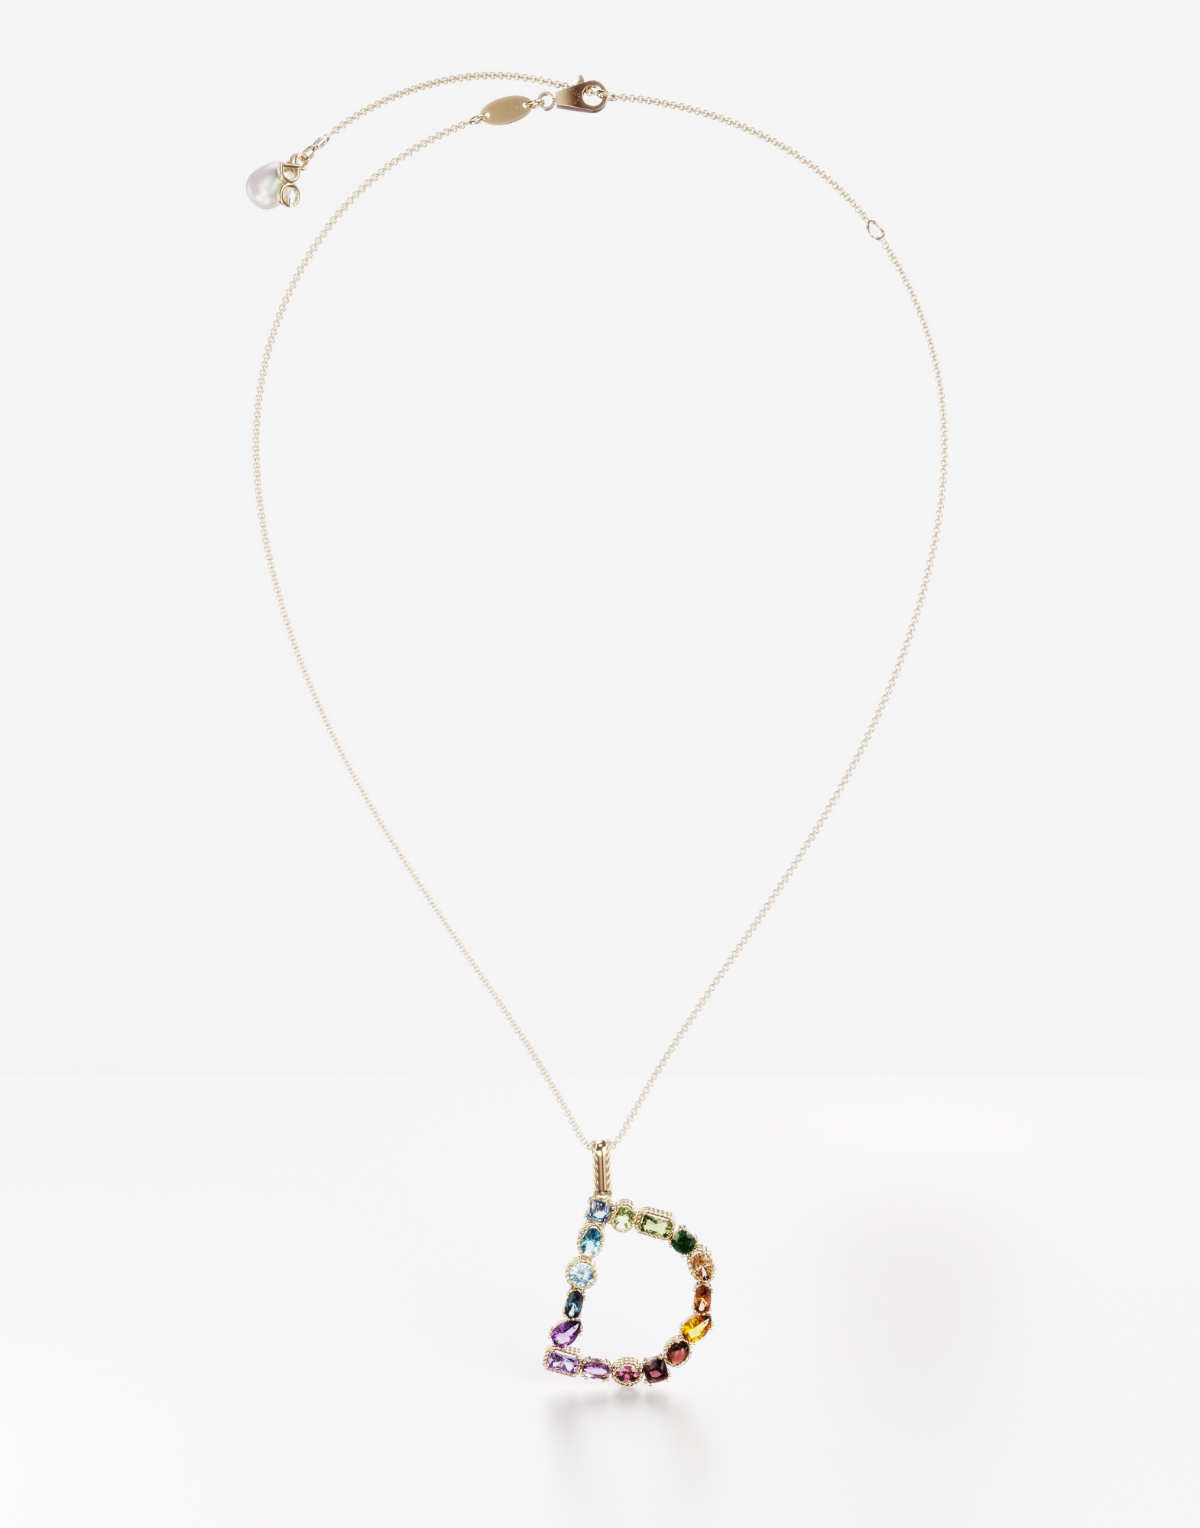 Dolce&Gabbana Fine Jewellery: the Alphabet Collection